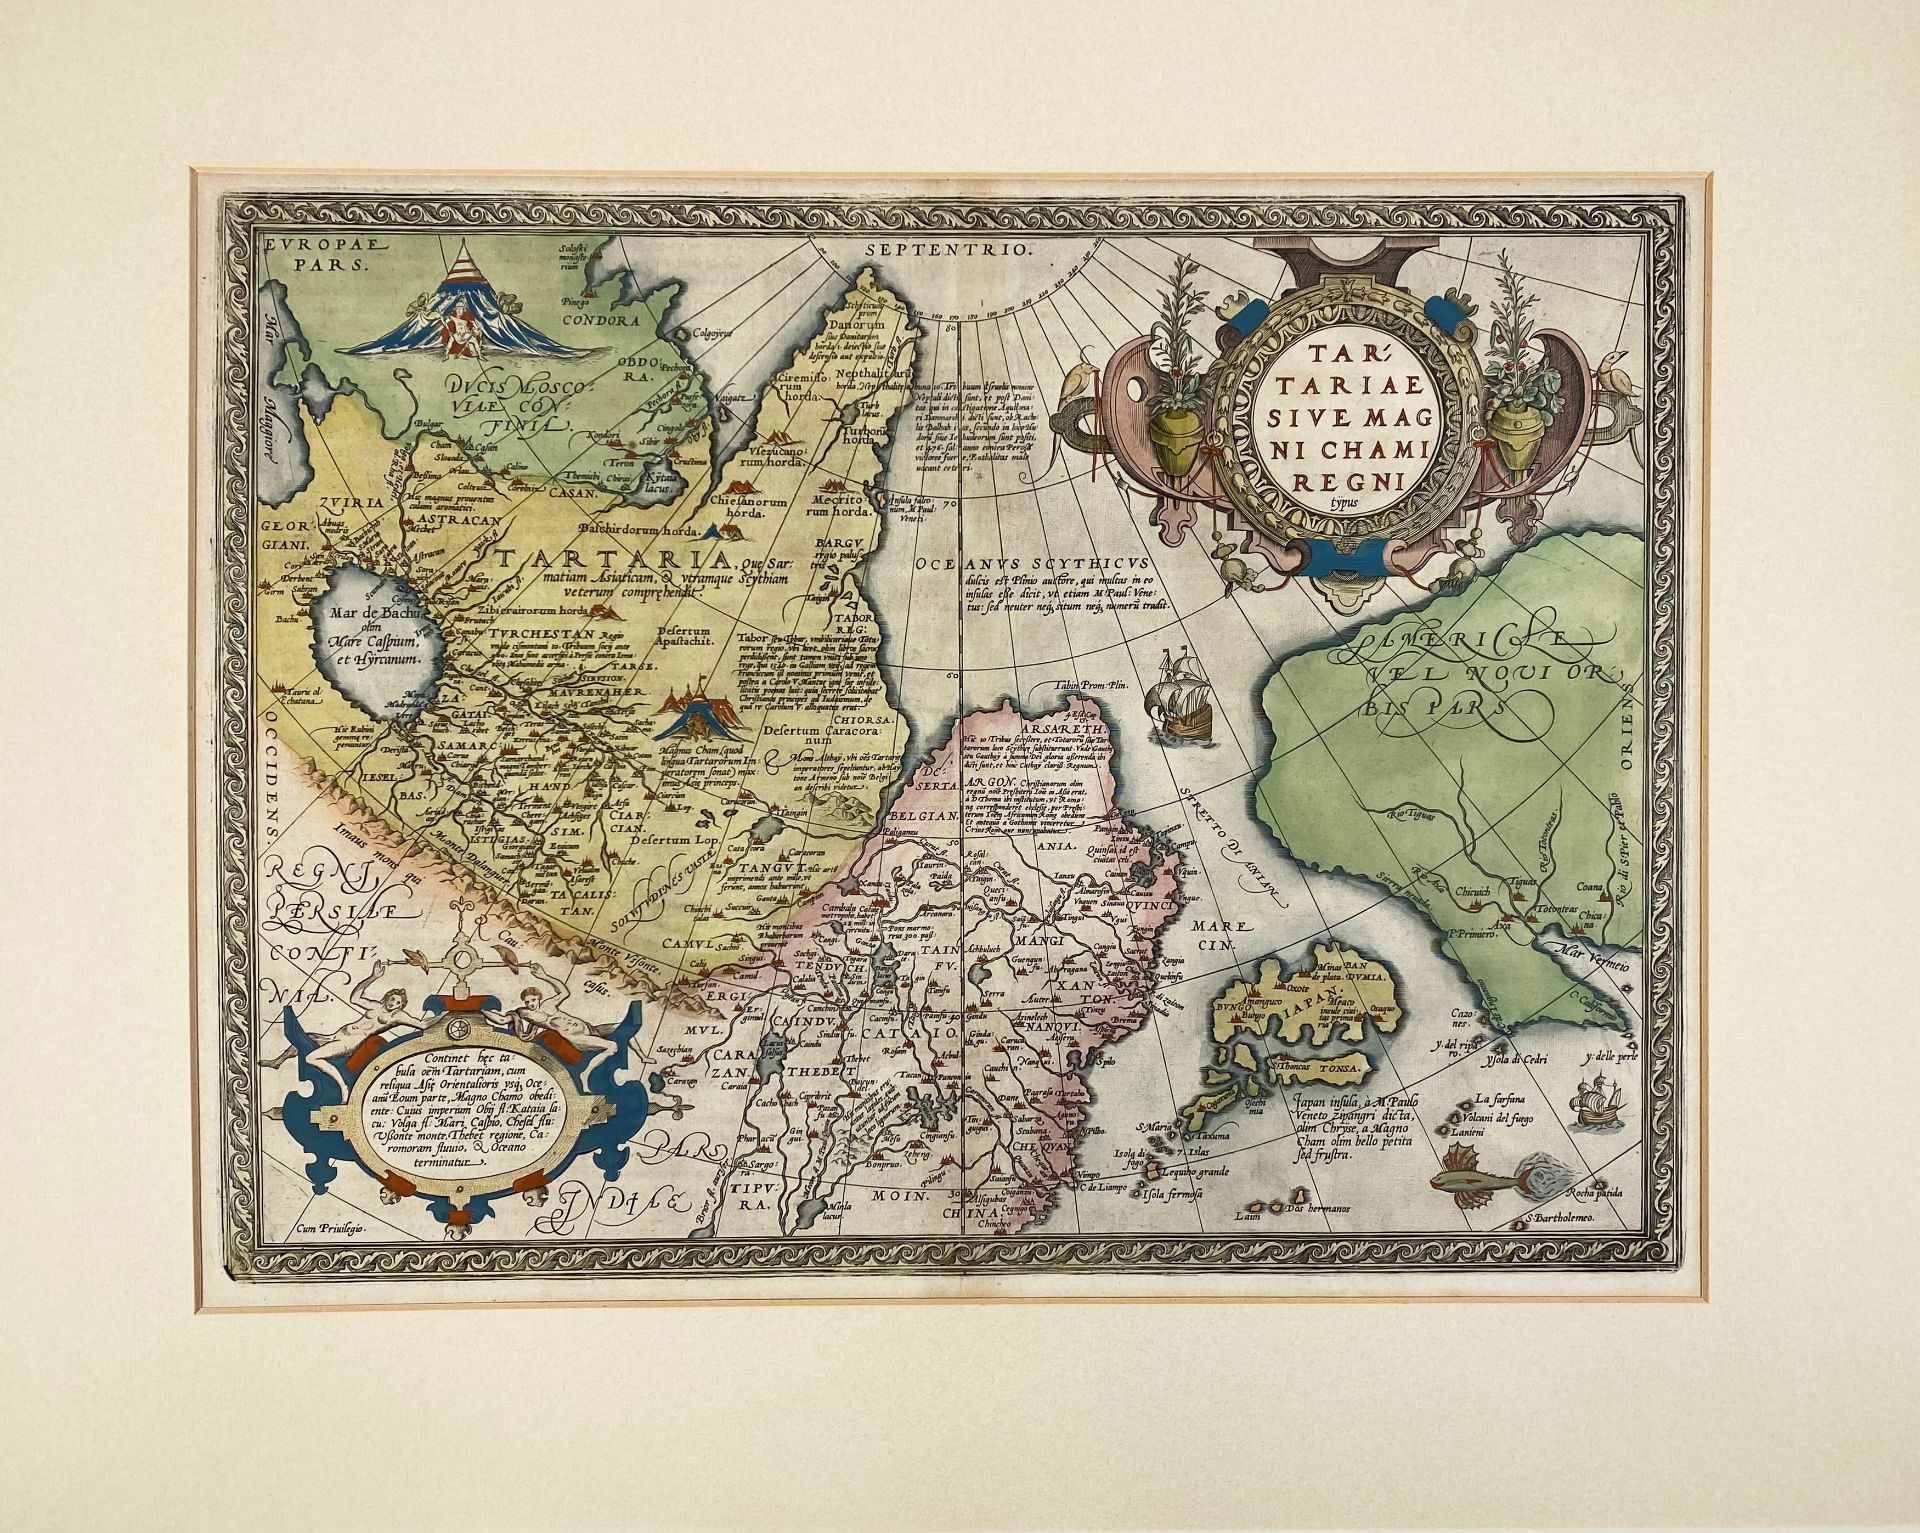 ASIA -- "TARTARIAE SIVE MAGNI CHAMI REGNI". (Lond., J. Norton, 1606). Engr. map